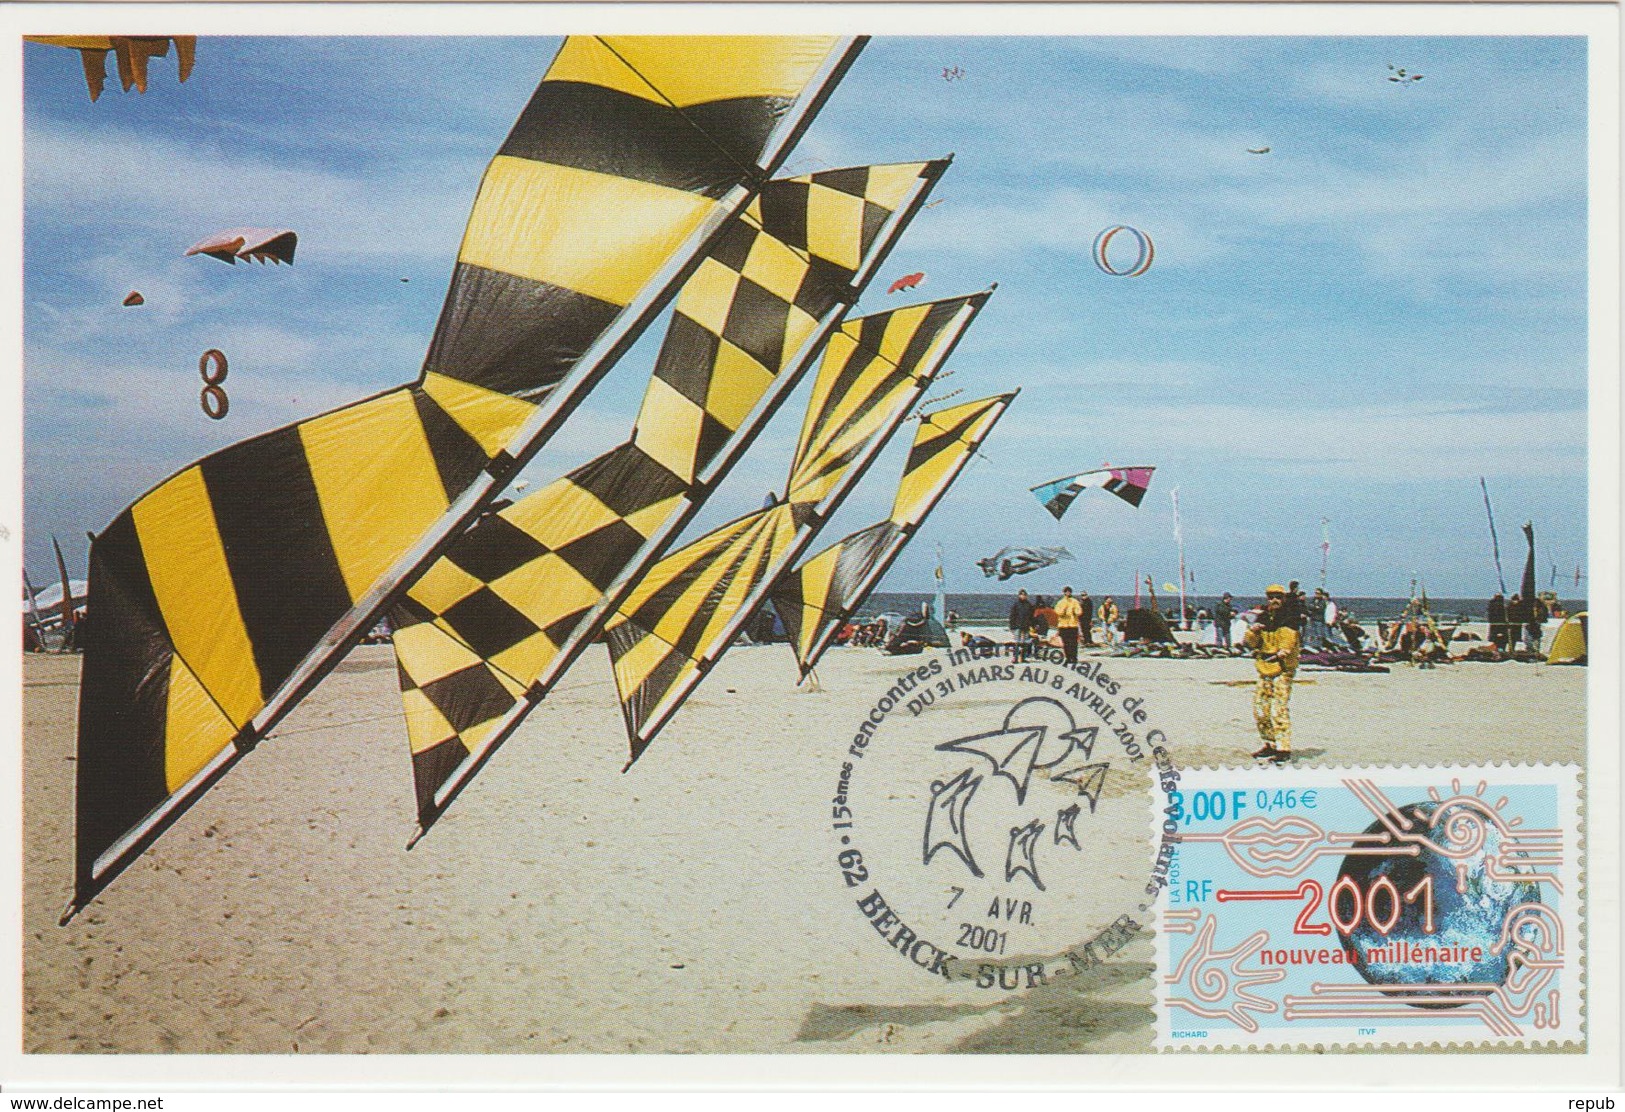 Berck Sur Mer Rencontre Internationale Cerfs-volants 2001 - Commemorative Postmarks